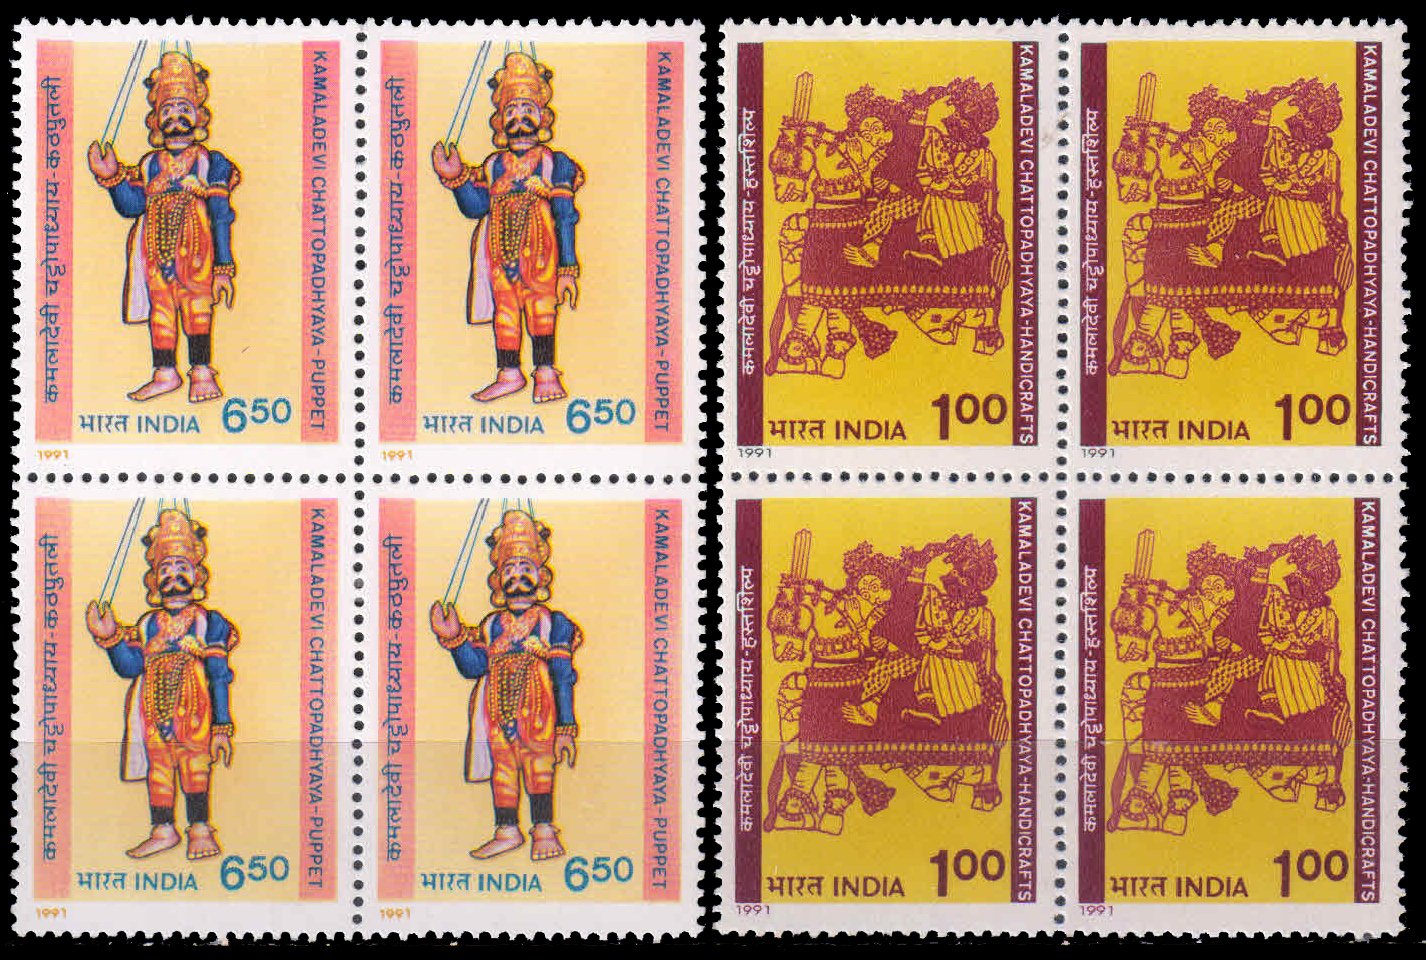 INDIA 1991-Kamaladevi Chattopadhyaya, Couple on Horse, Traditional Puppet, Set of 2 Blocks, MNH, S.G. 1477-1478